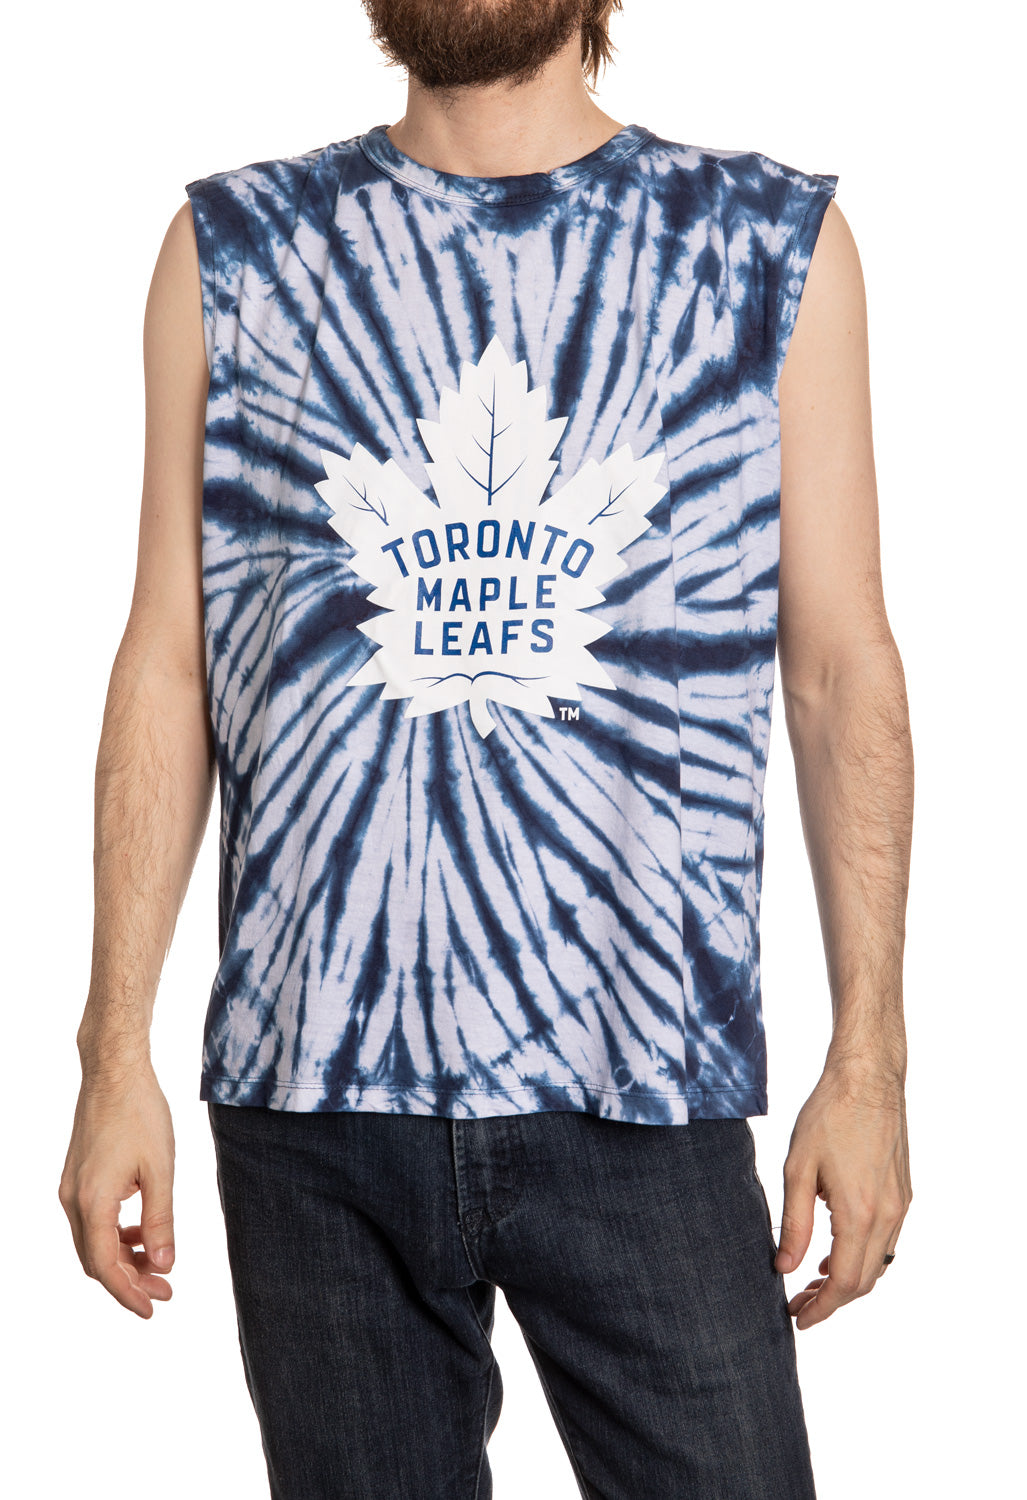 Toronto Maple Leafs Spiral Tie Dye Sleeveless Shirt for Men